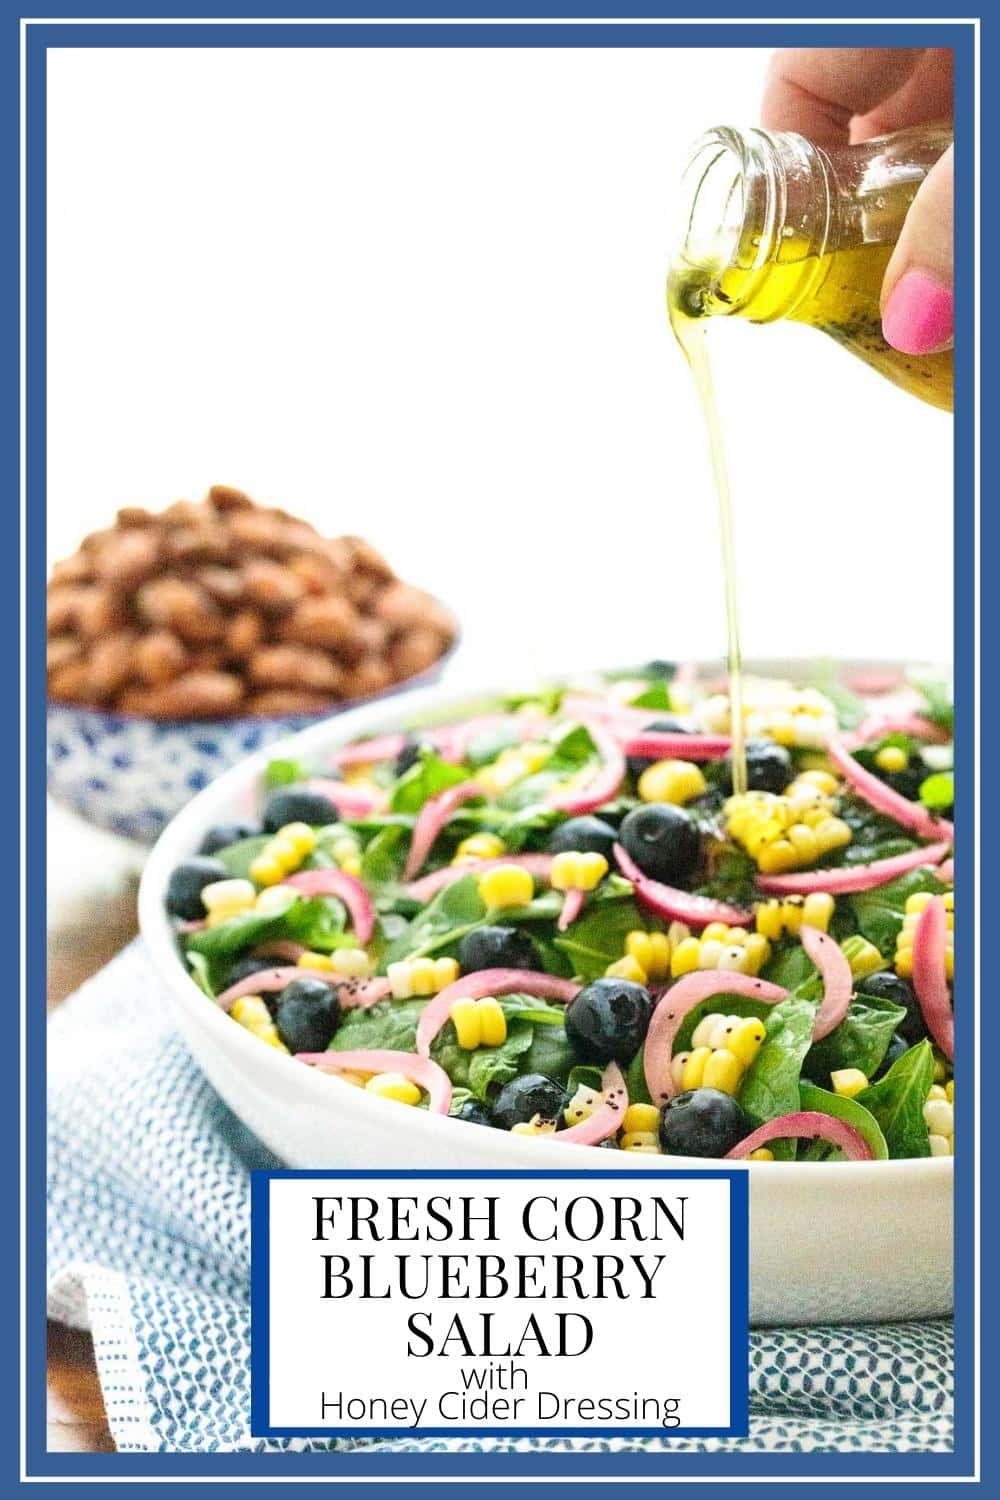 Fresh Corn Blueberry Spinach Salad